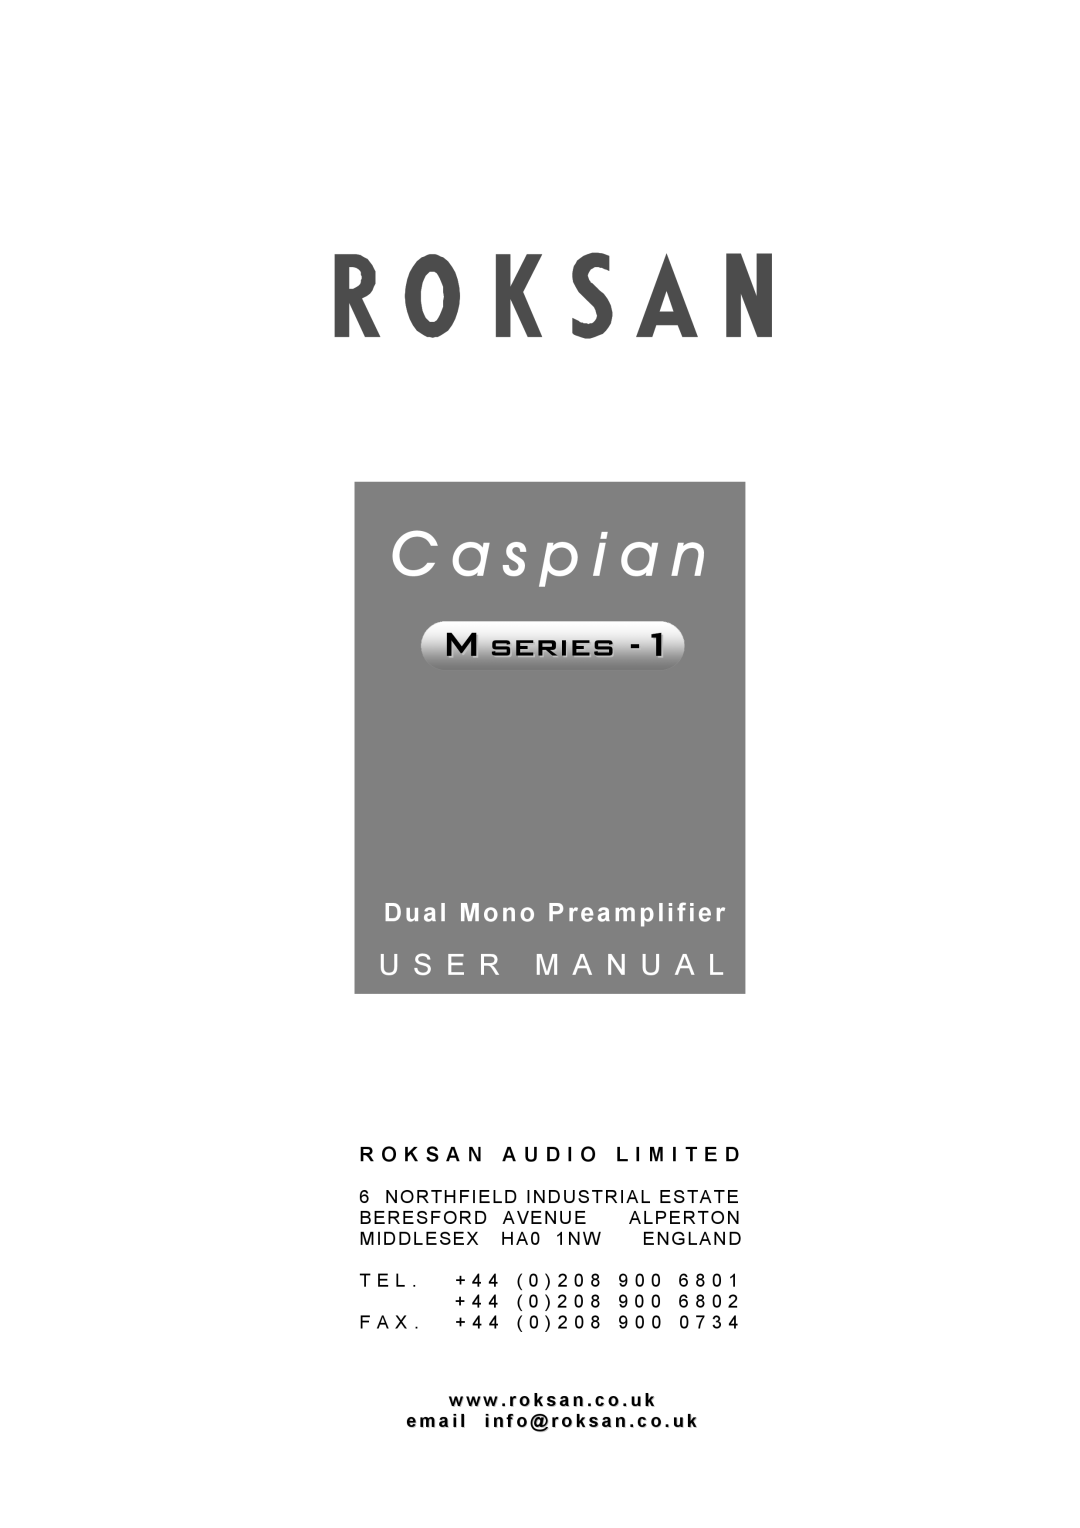 Roksan Audio M series --1 user manual K S a N a U D I O L I M I T E D, Www .roksan . co . uk email info@roksan . co . uk 